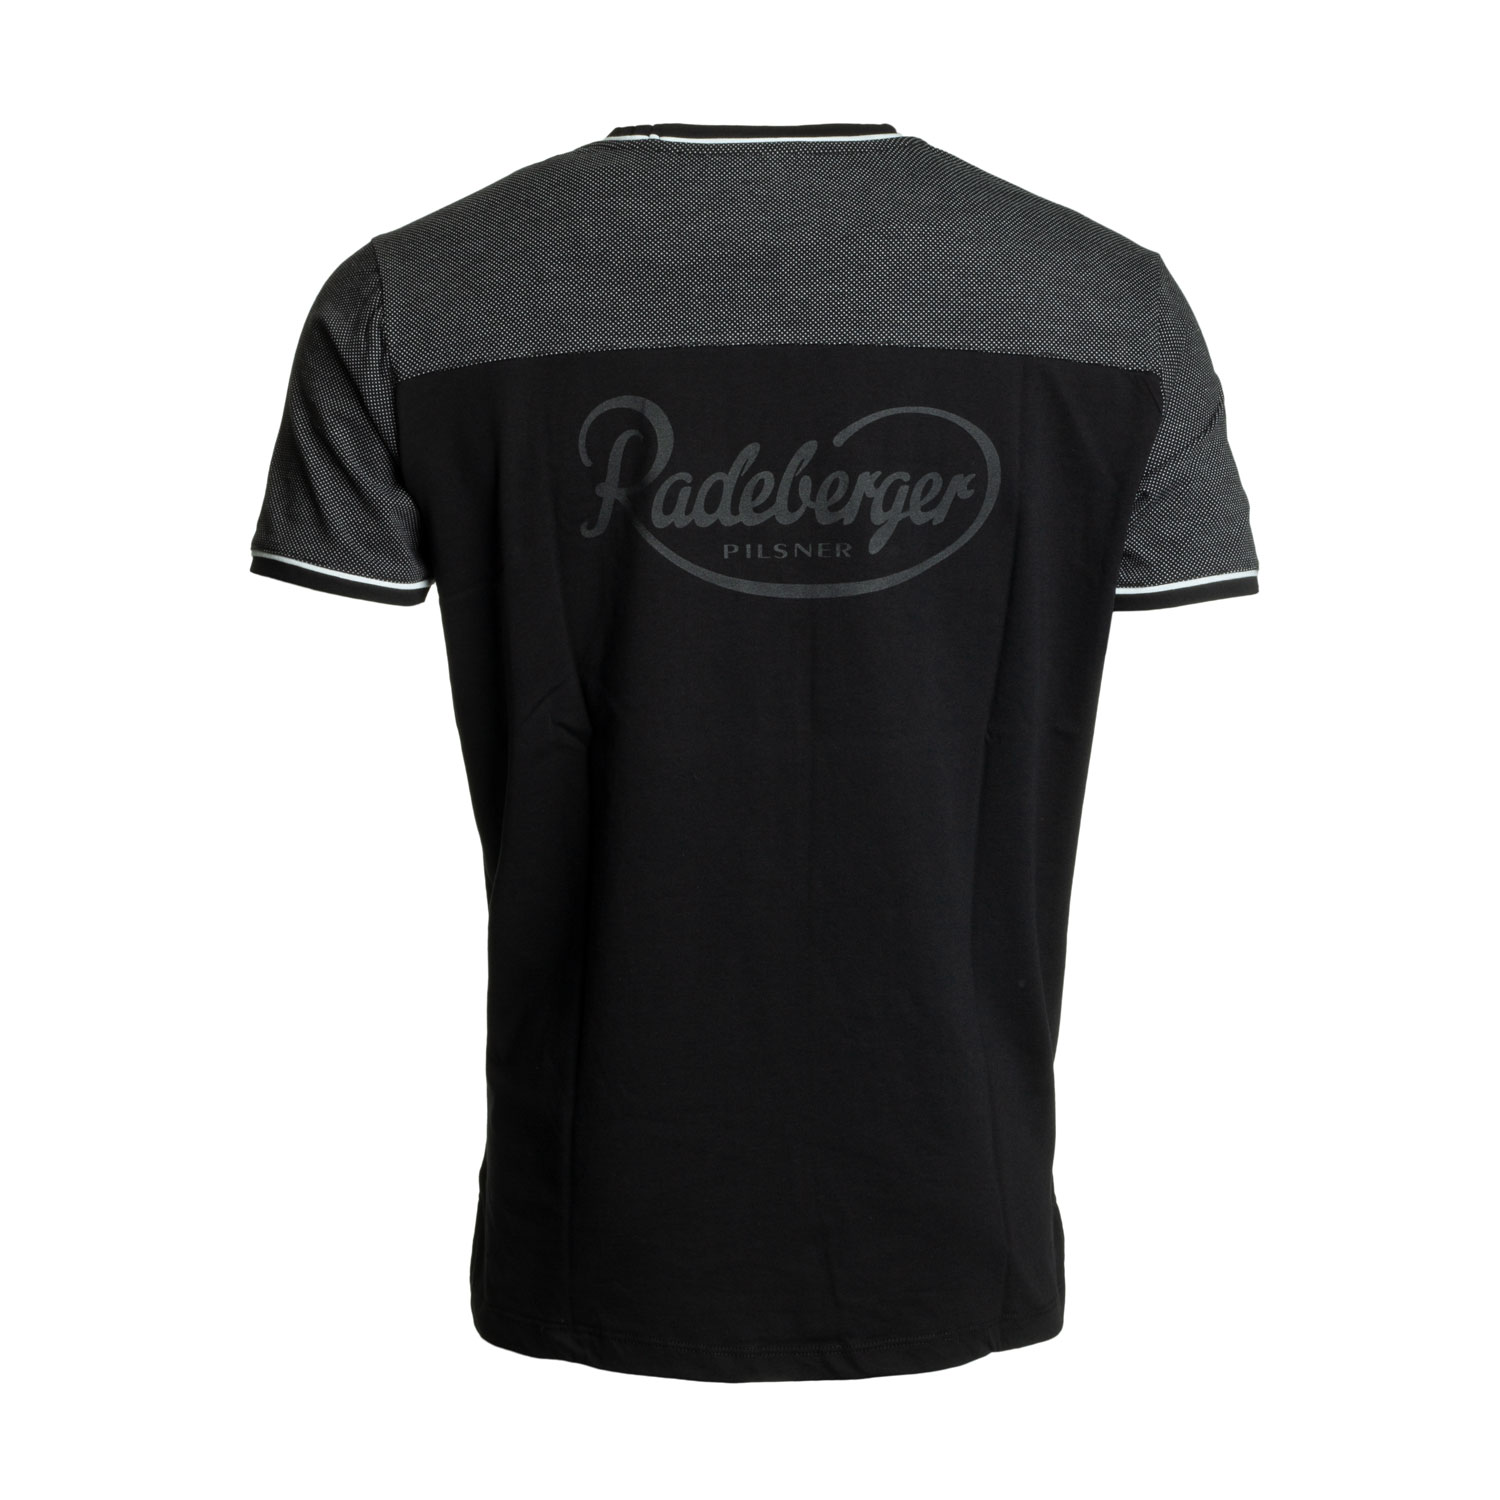 Radeberger T-Shirt "New Collection", Herren